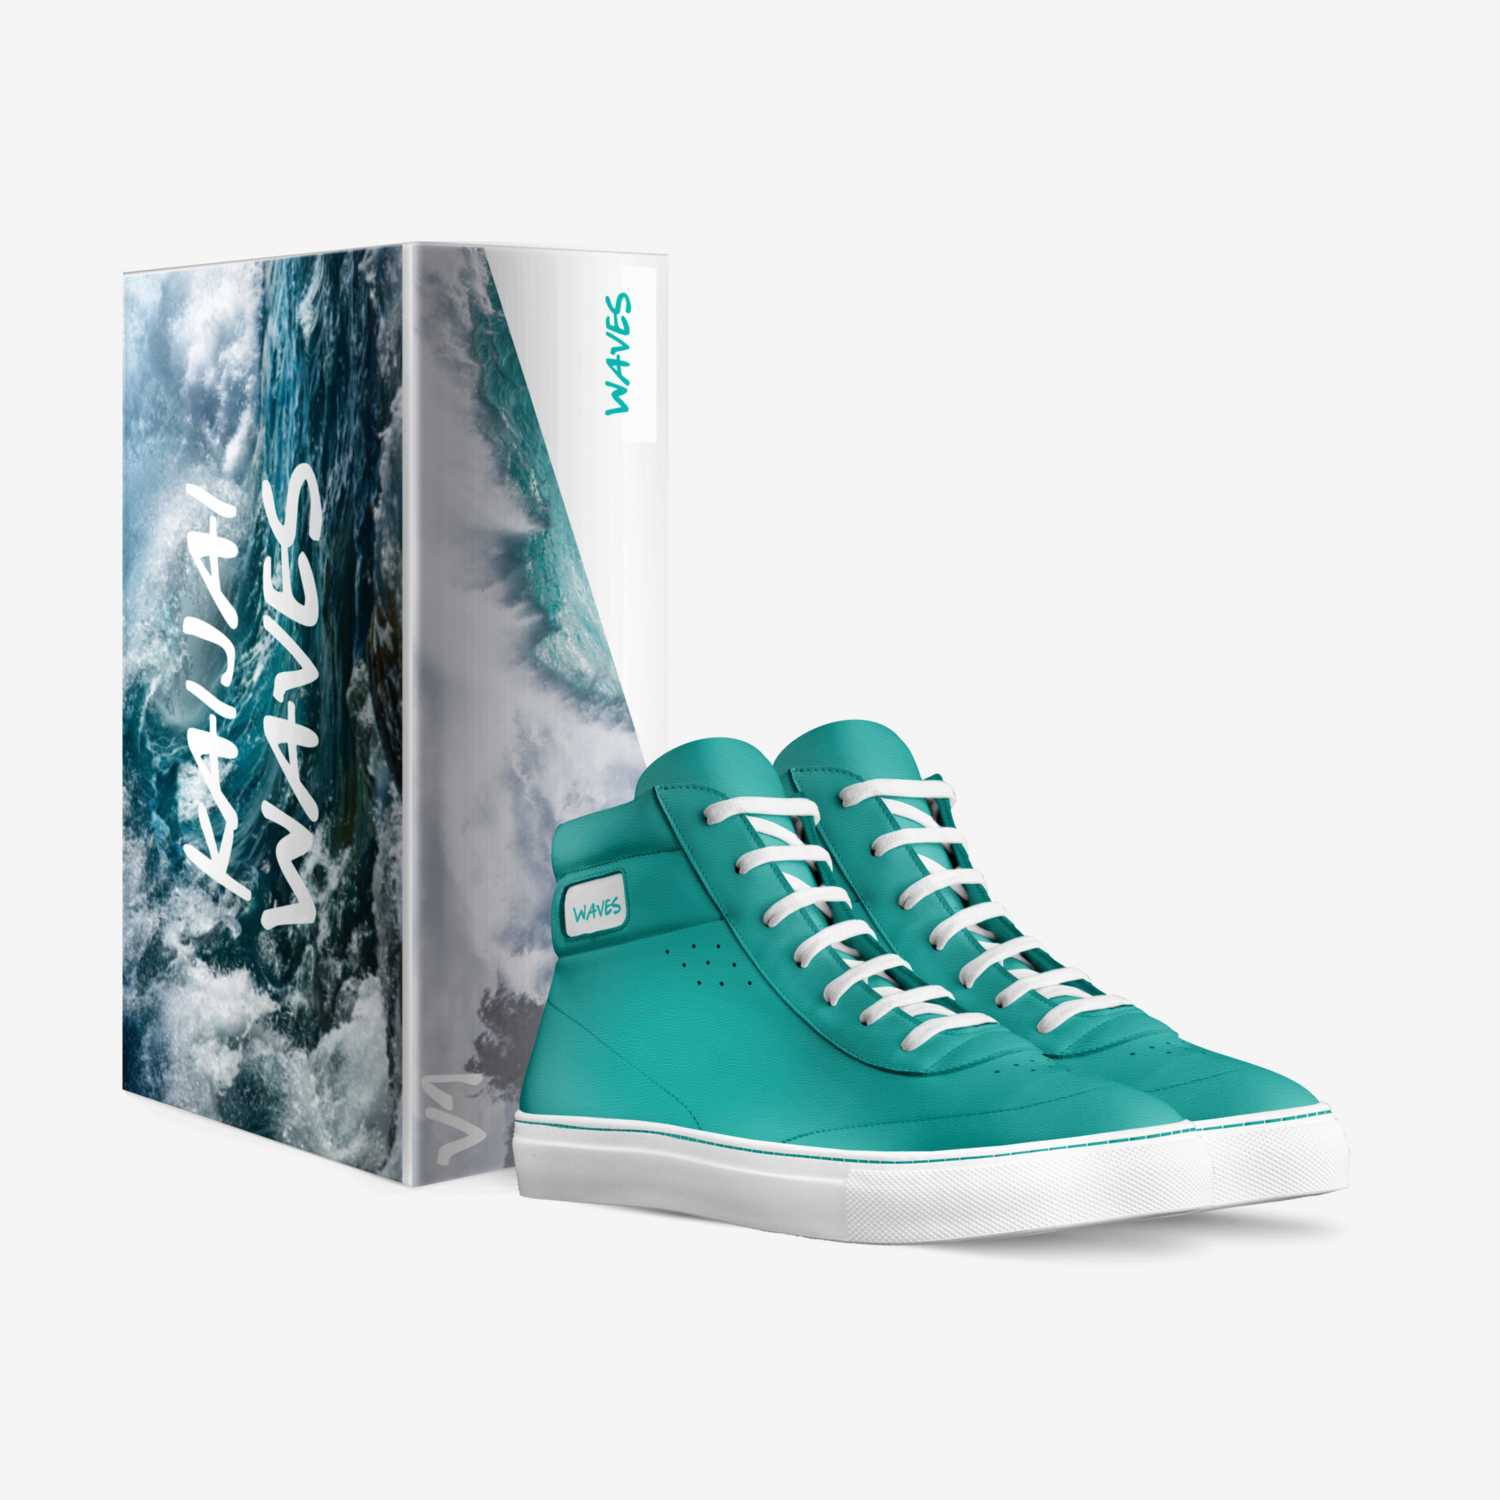 KaiJai Waves 1's custom made in Italy shoes by Keaton Jones | Box view